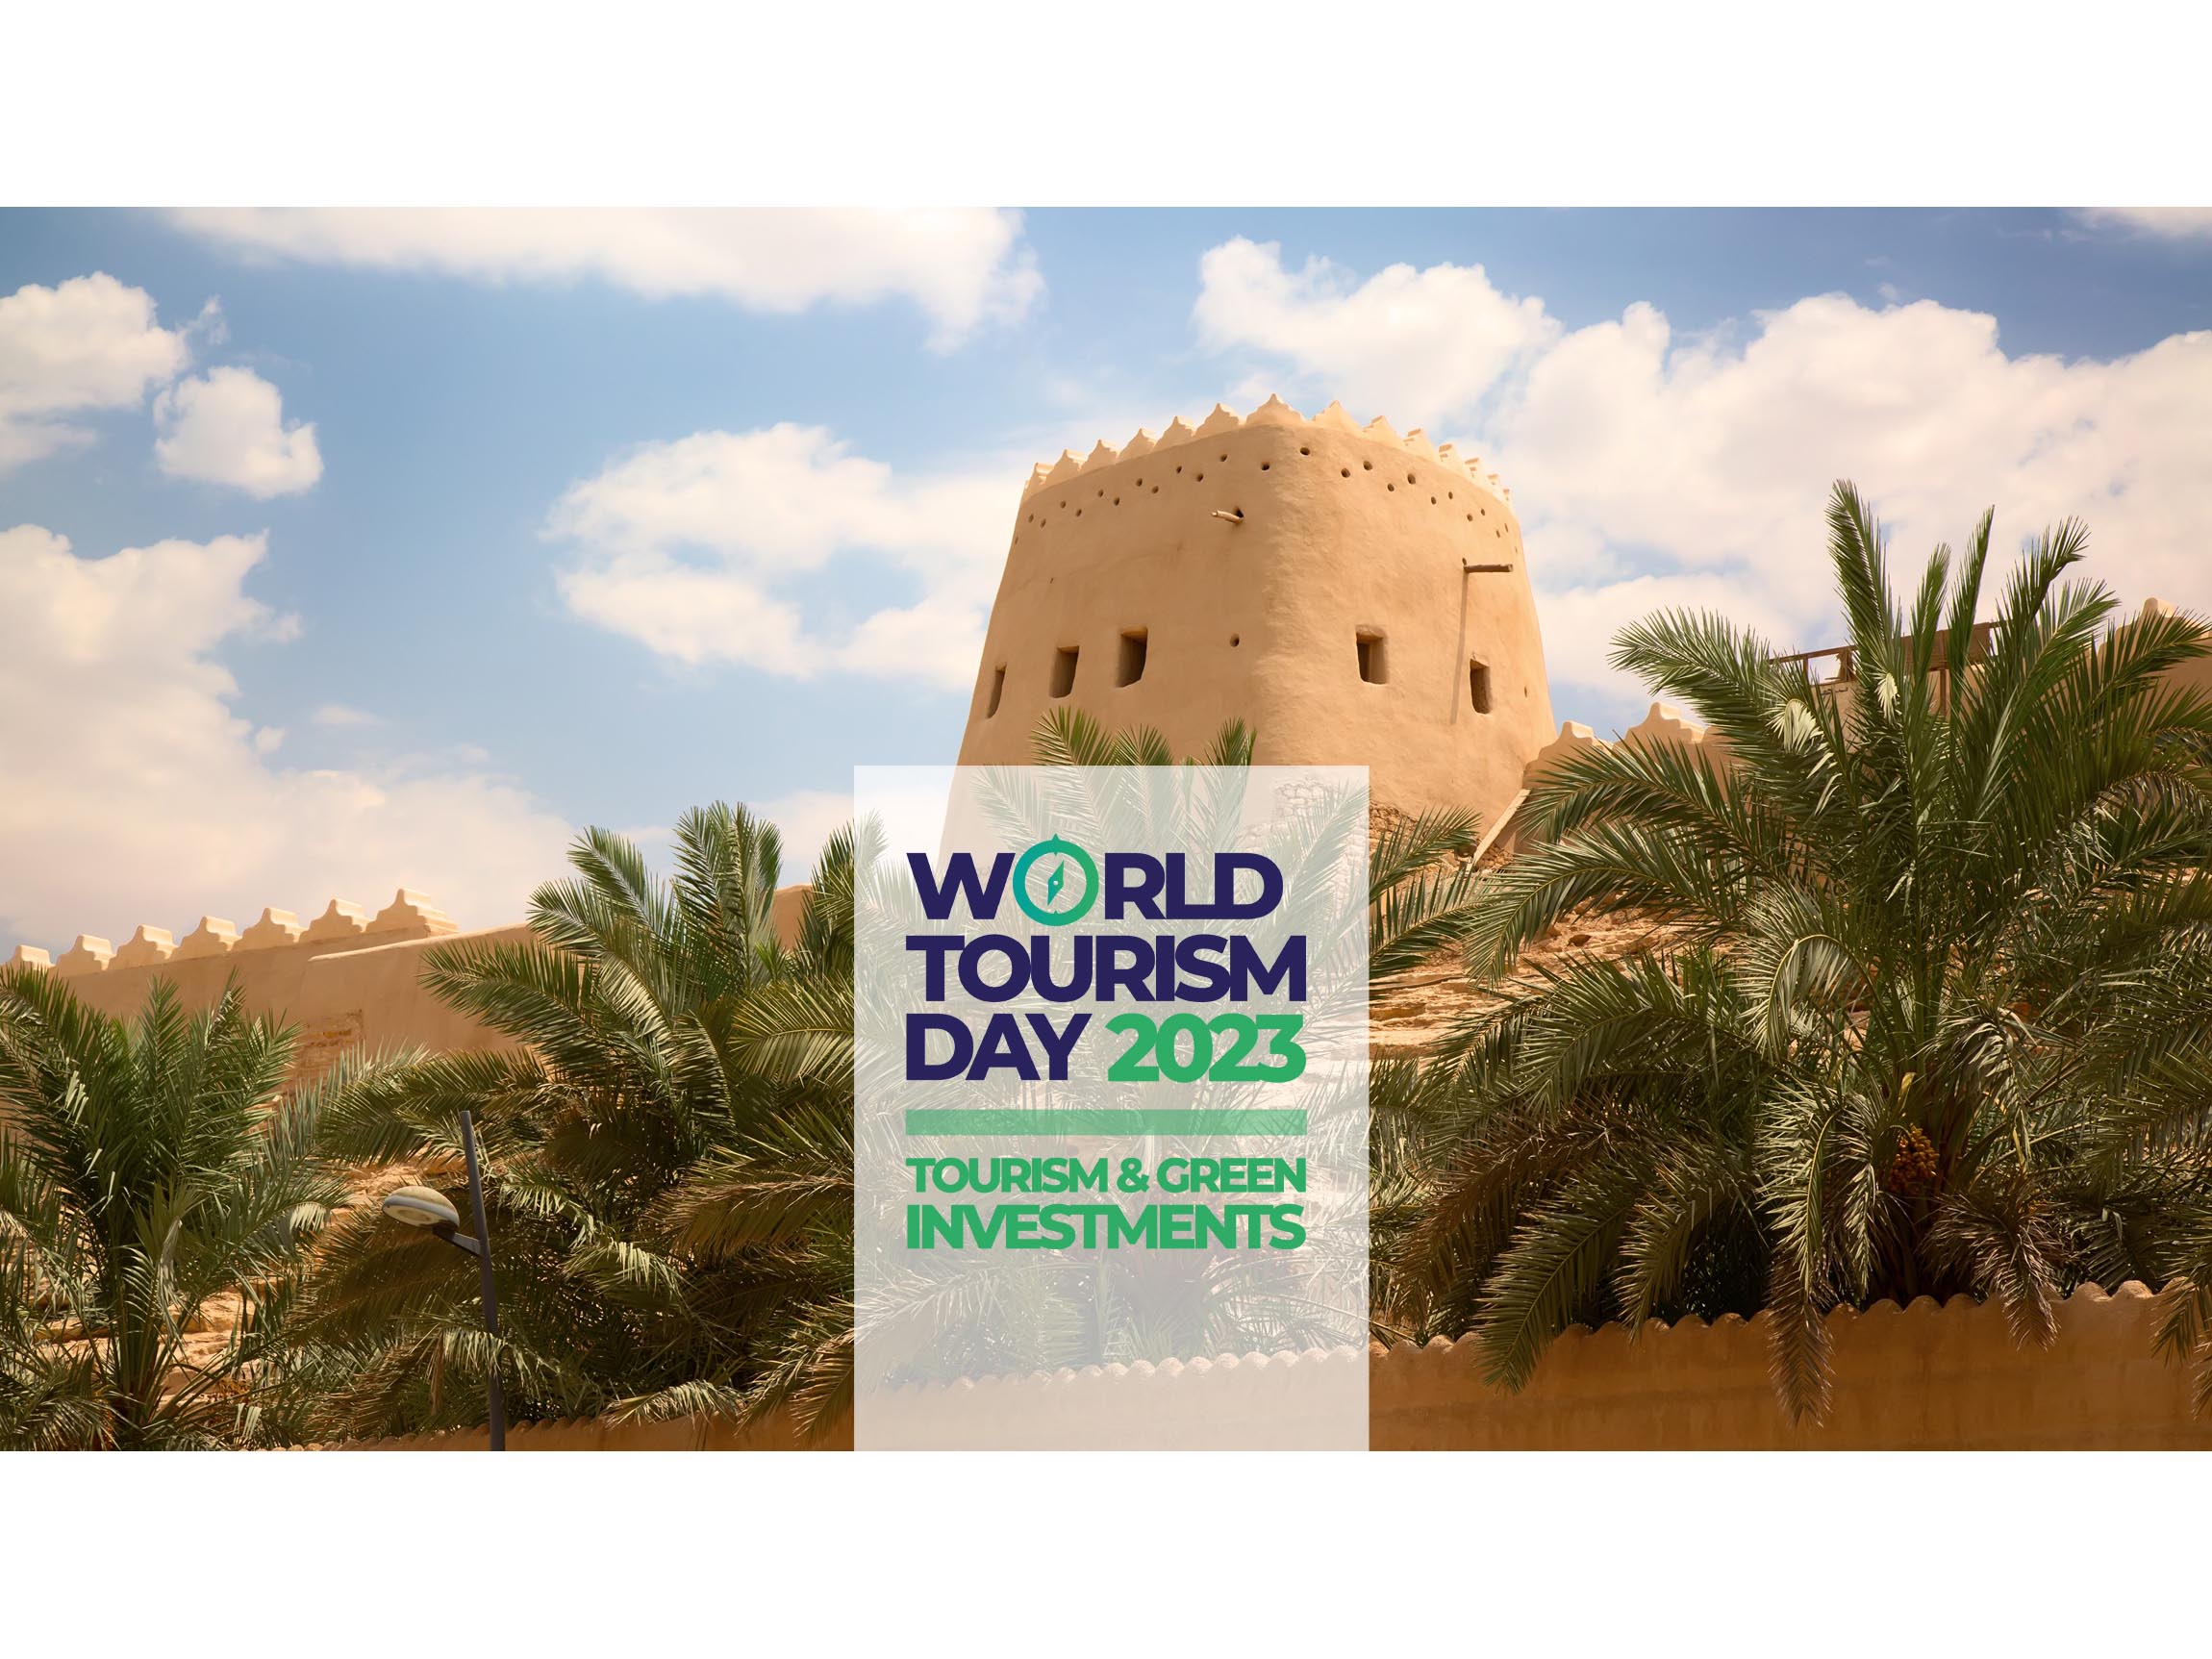 Imagination creates experience in celebration of UNWTO World Tourism Day 2023 in Saudi Arabia